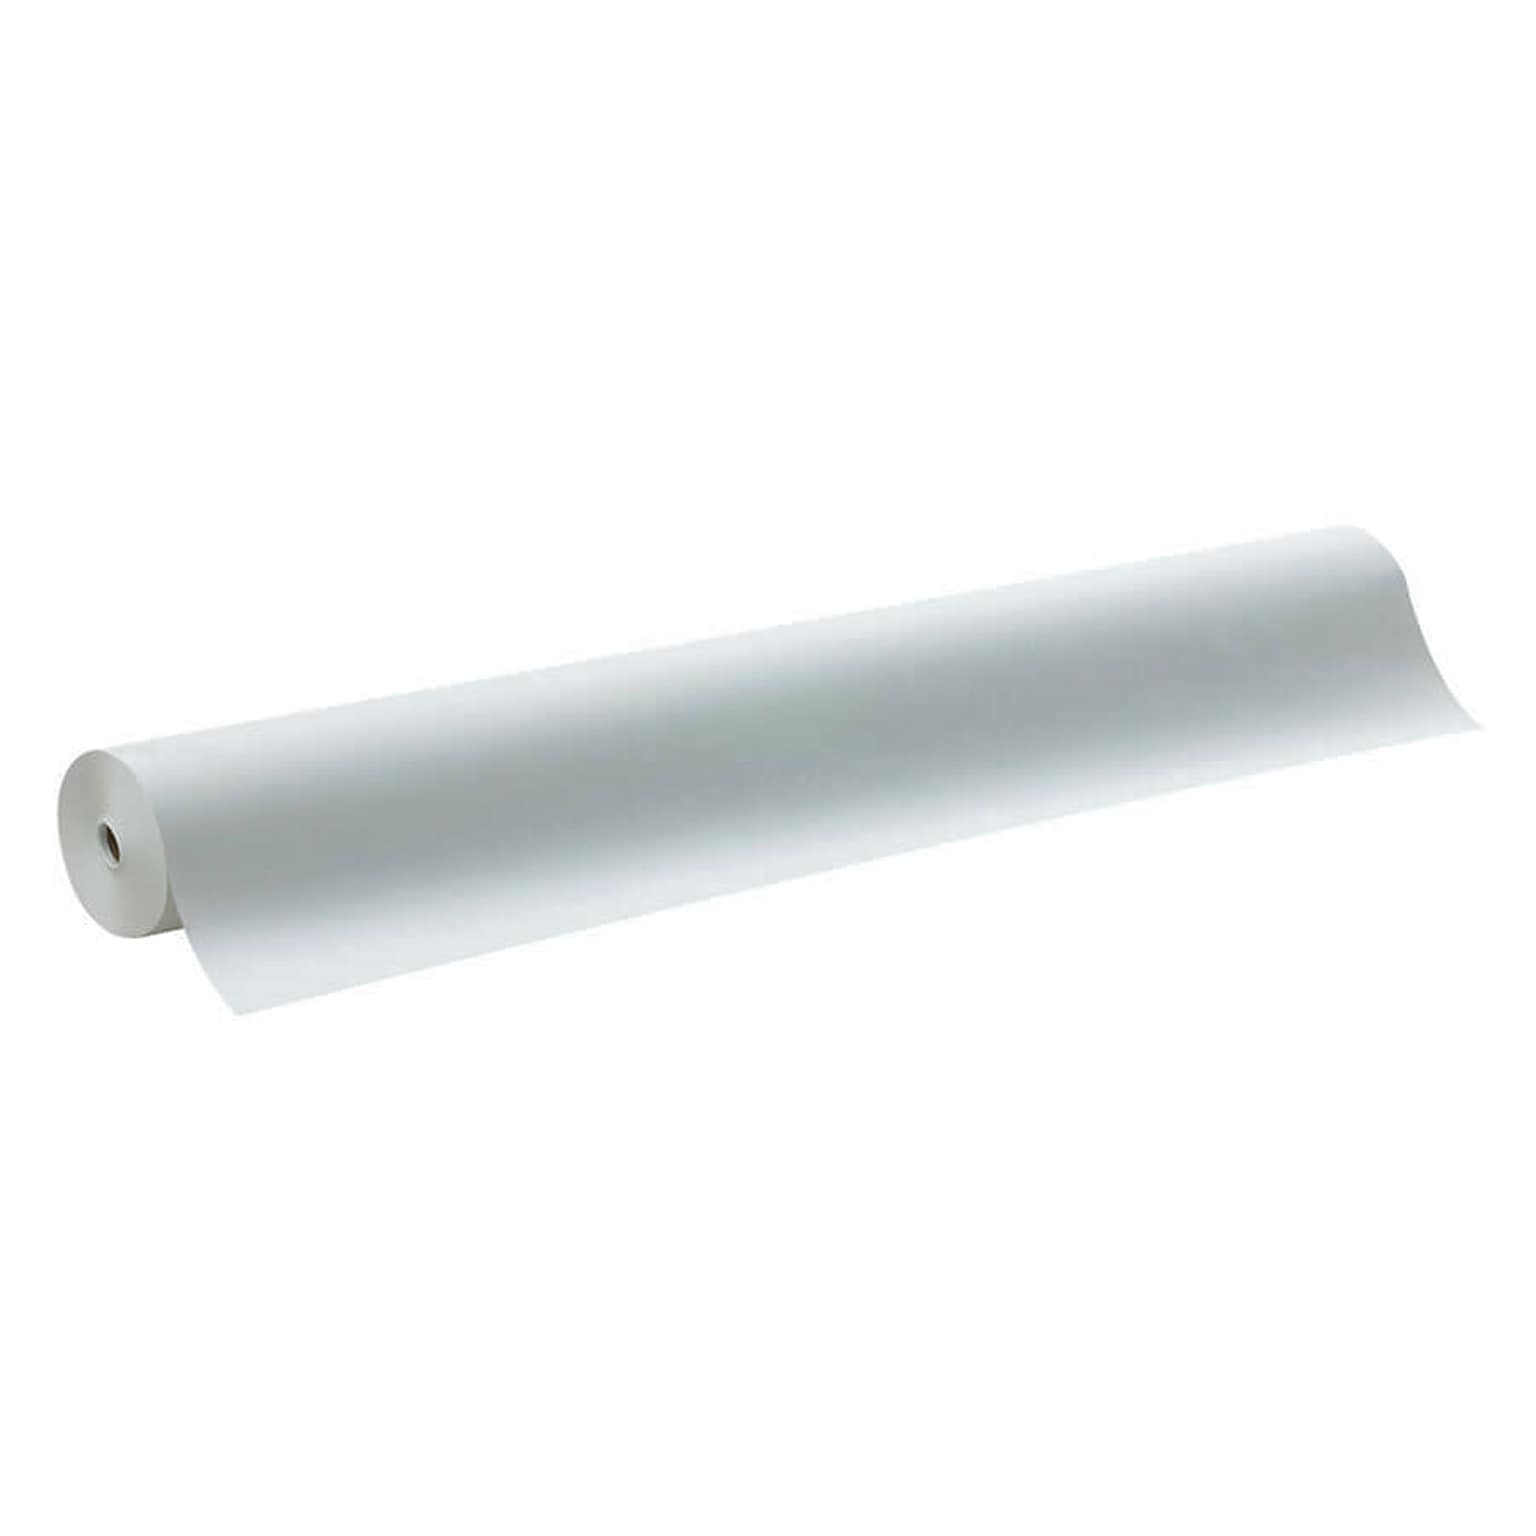 Pacon Lightweight Kraft Paper Roll, 36 x 200, White (PAC100399)